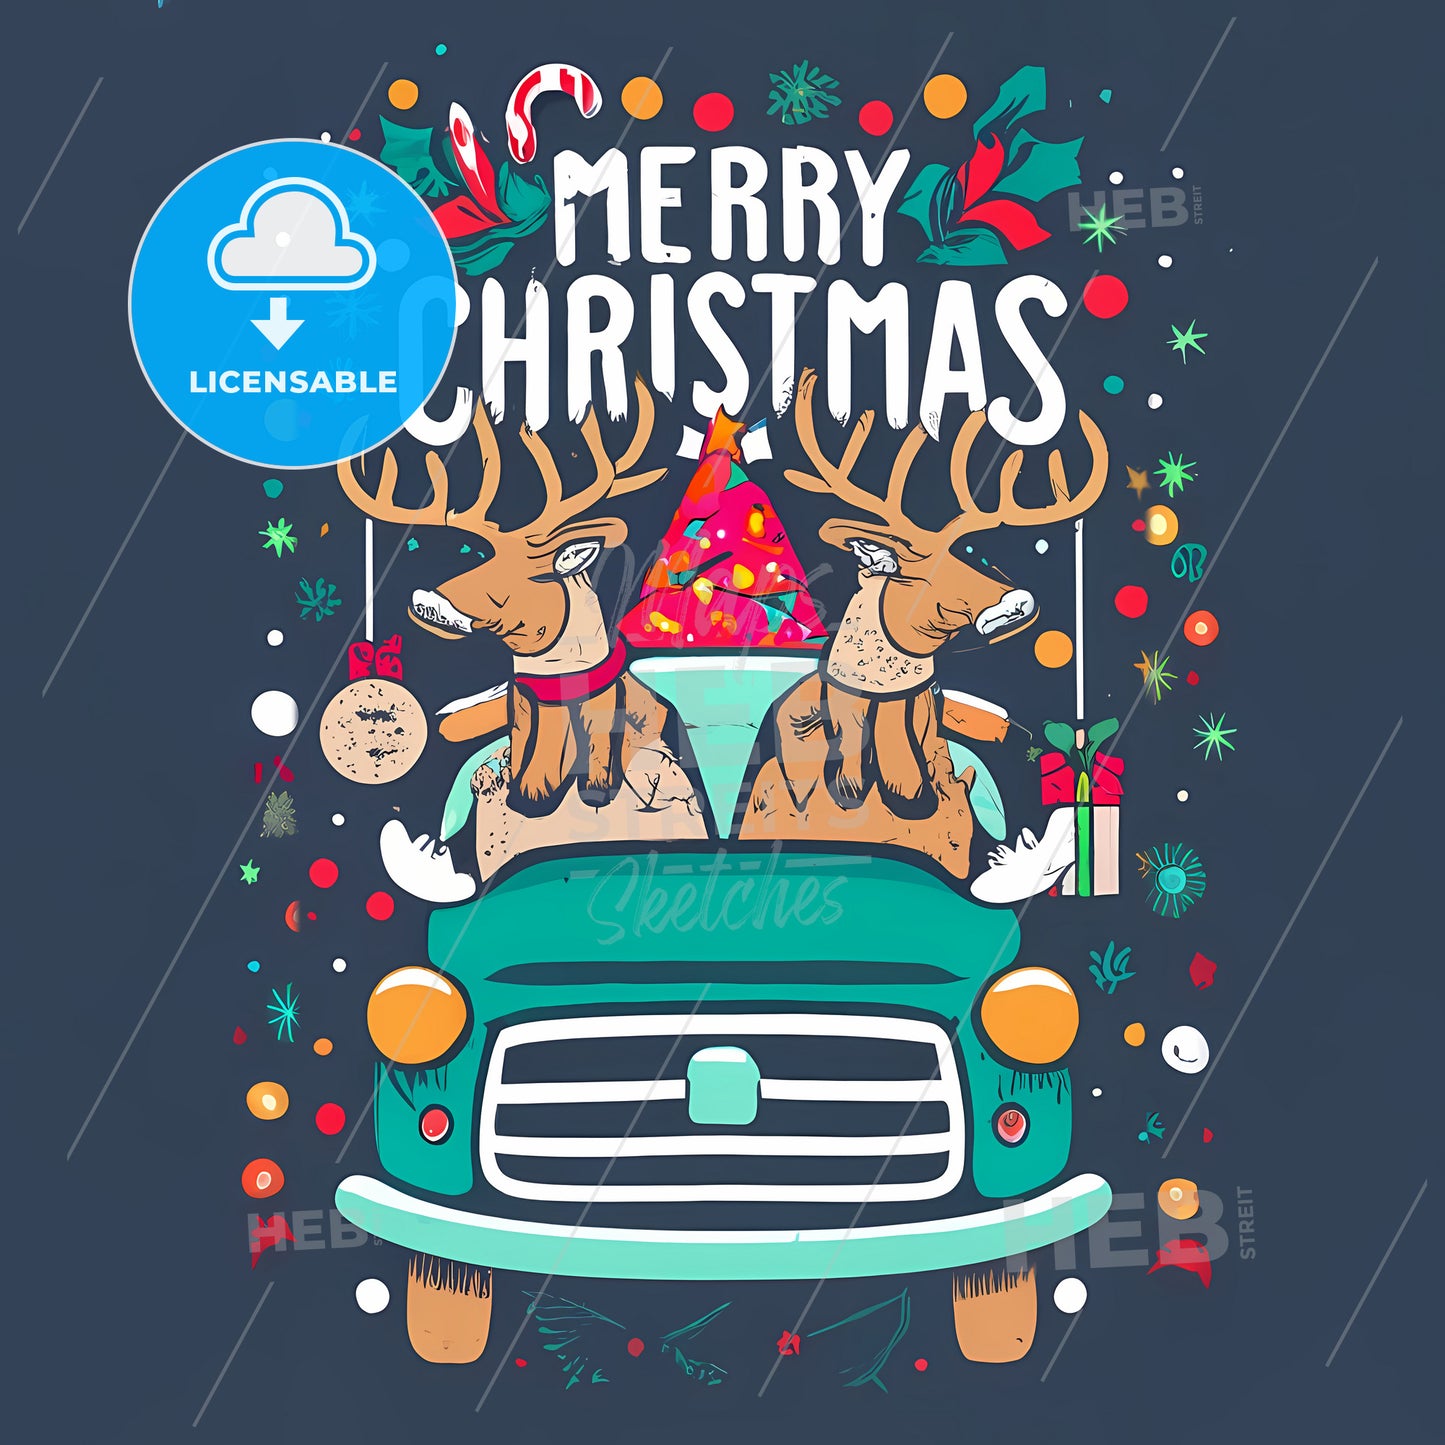 Merry Christmas - A Cartoon Of Reindeer In A Car